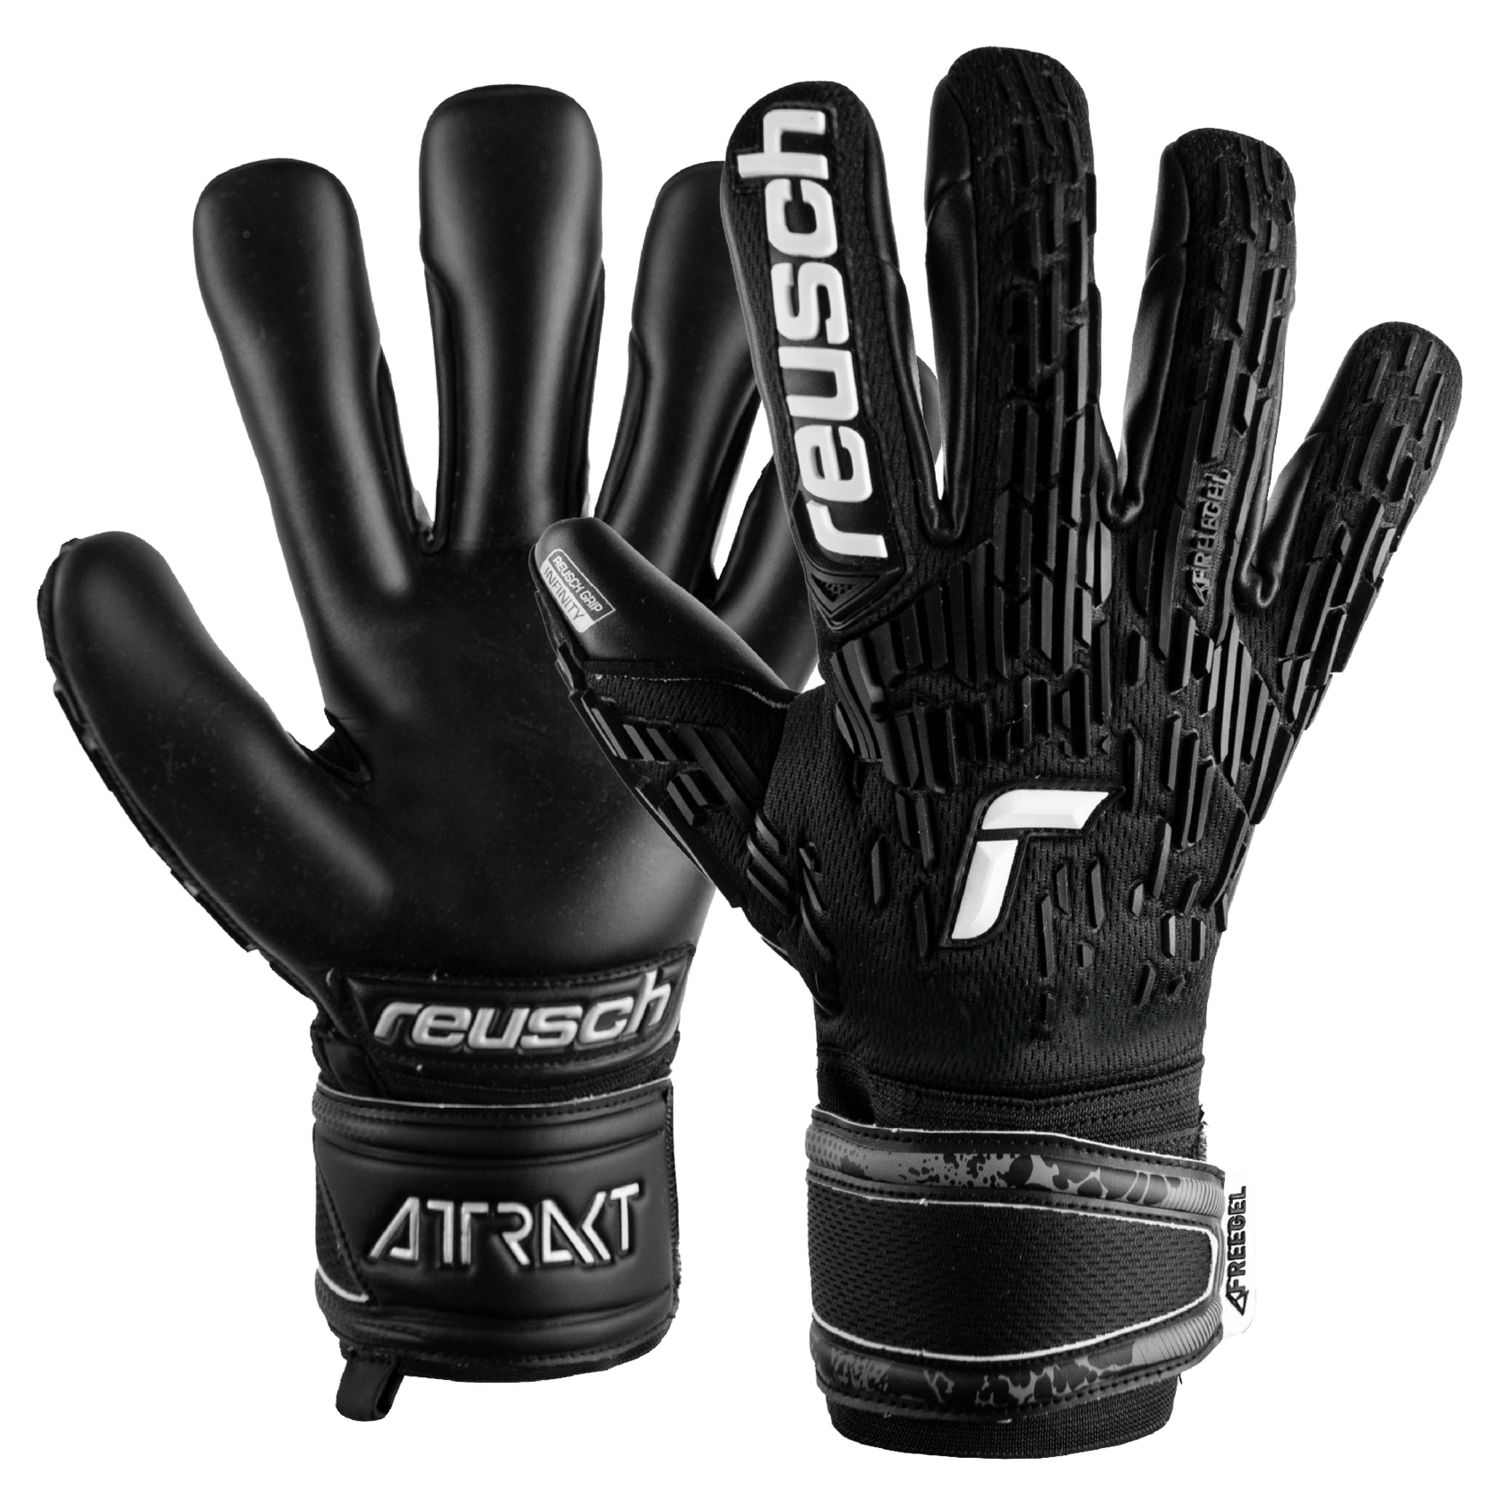 Reusch Attrakt Freegel Infinity Finger Support Goalkepper Gloves Black (Pair)